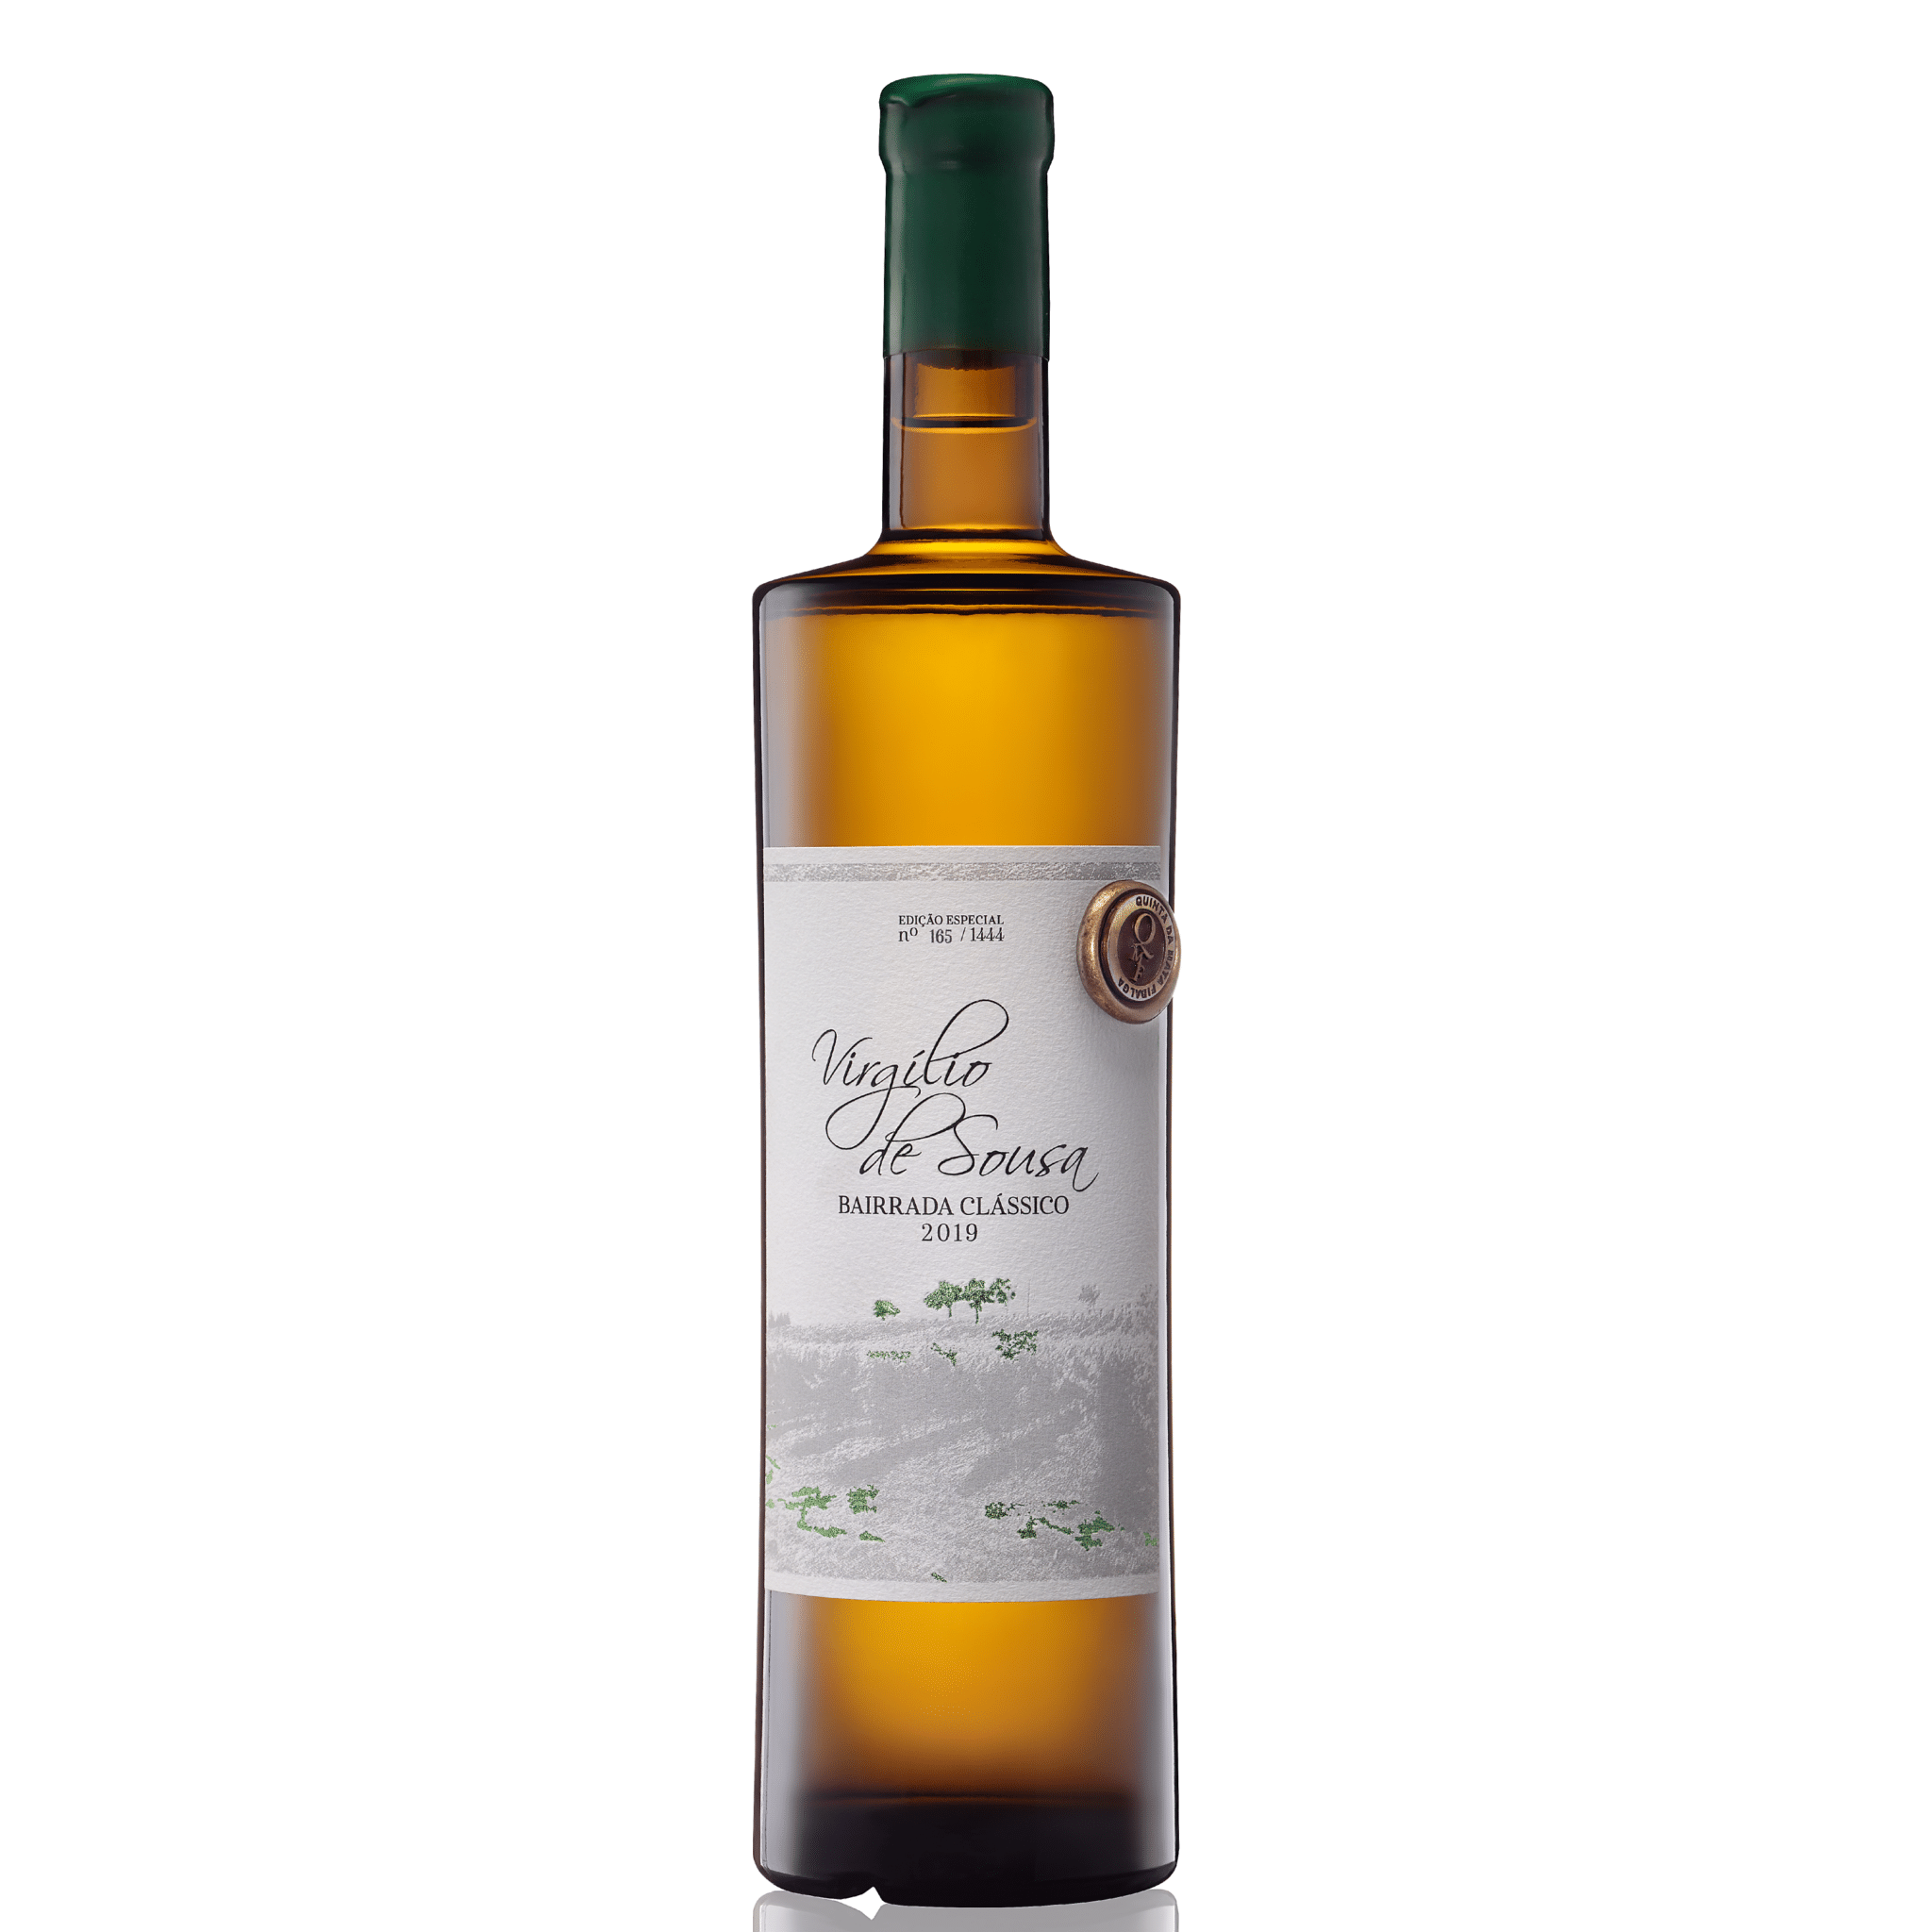 Virgílio de Sousa Clássico white wine